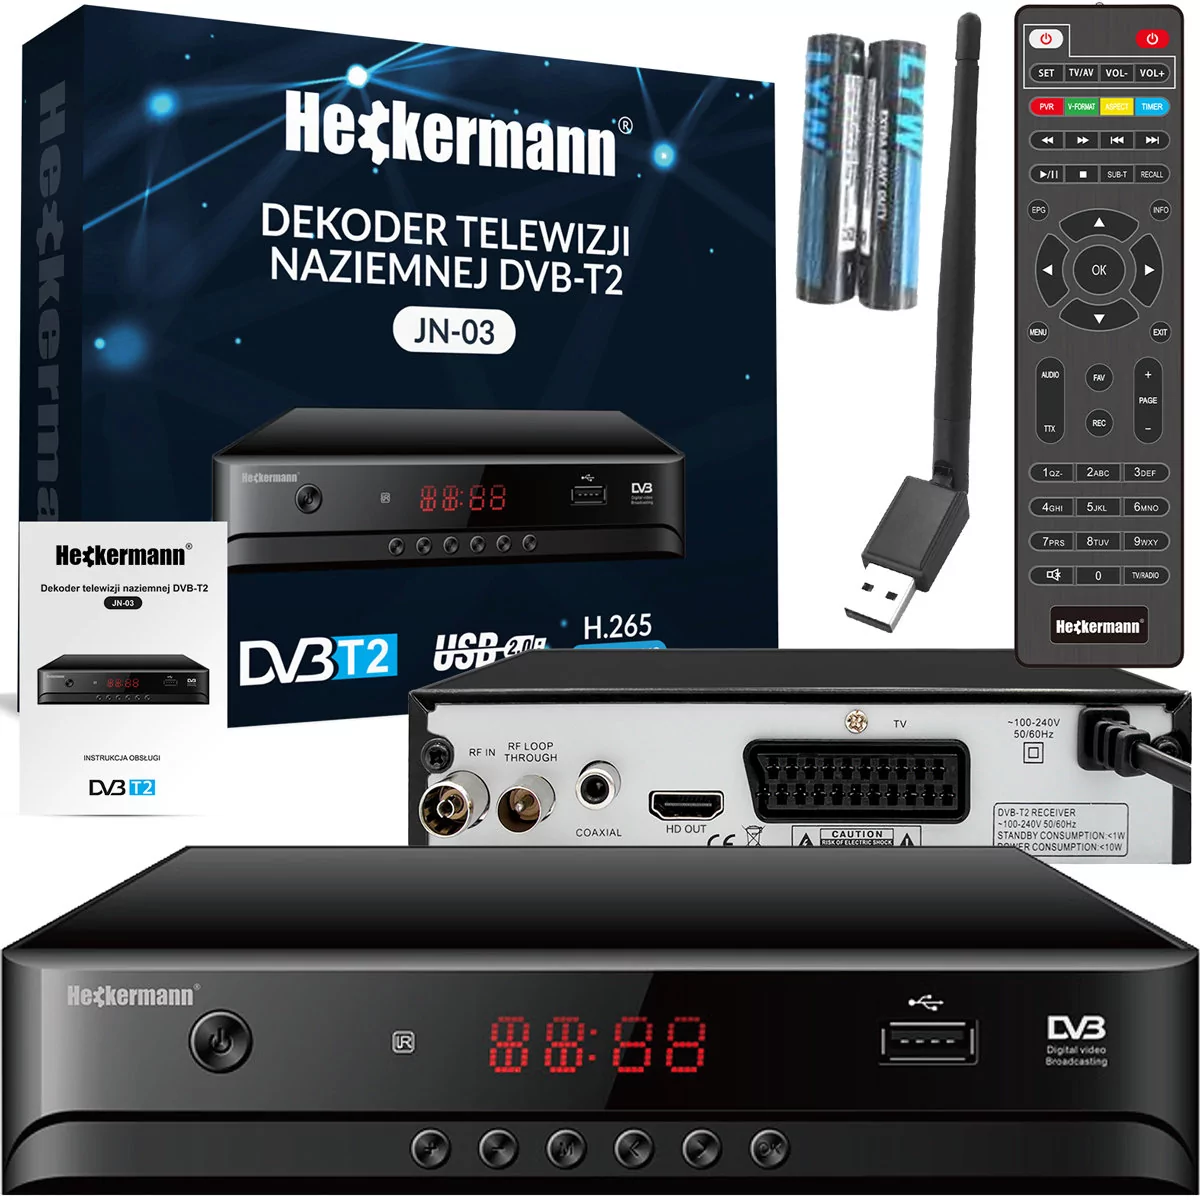 Tuner Dekoder DVB-T2 Heckermann JN-03